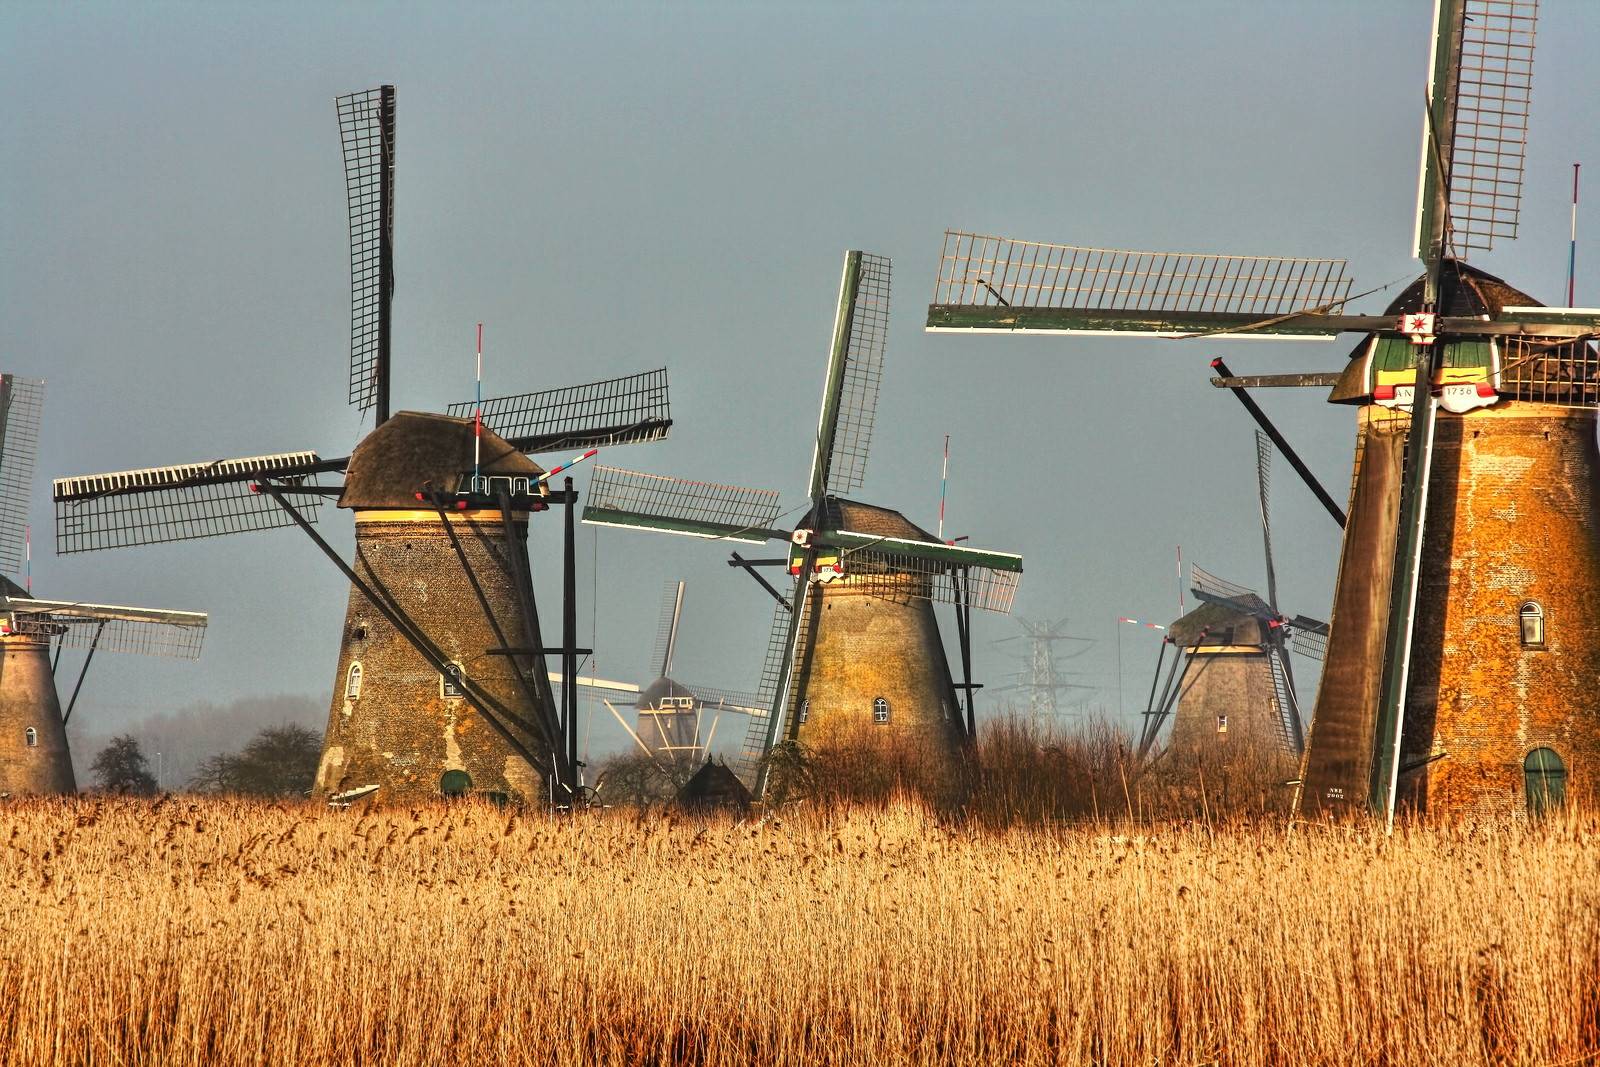 Eneco: Dutch Windmills are Moving Trains